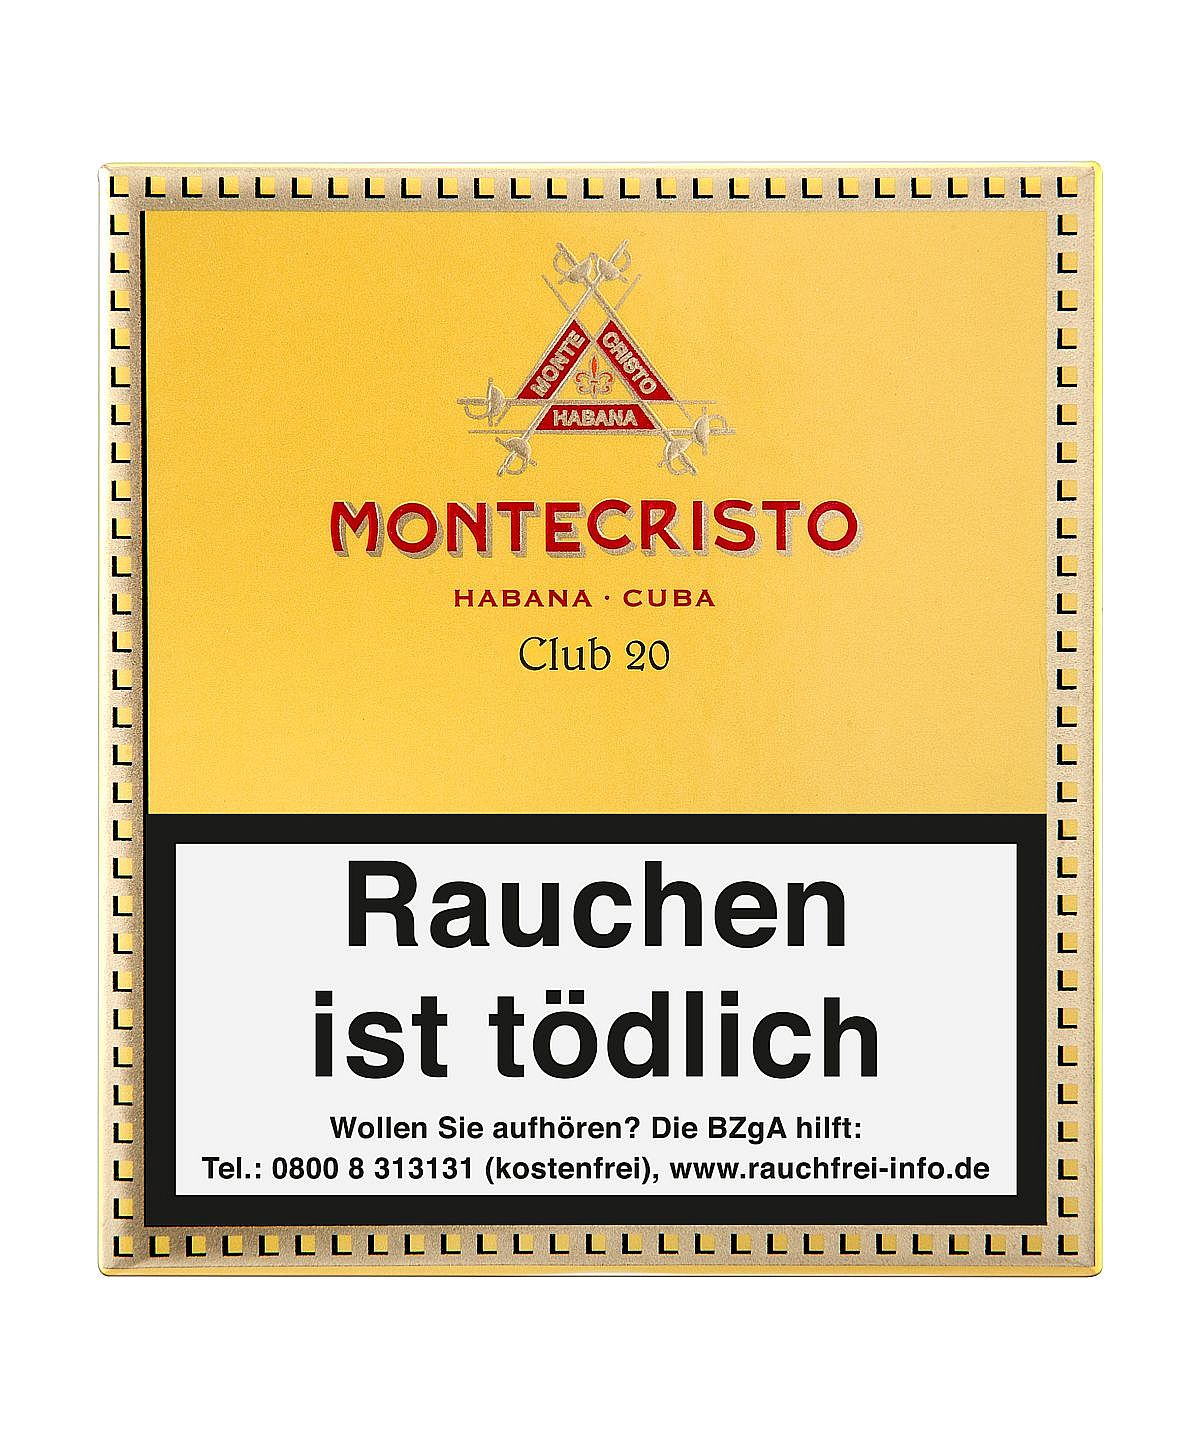 Montecristo Club